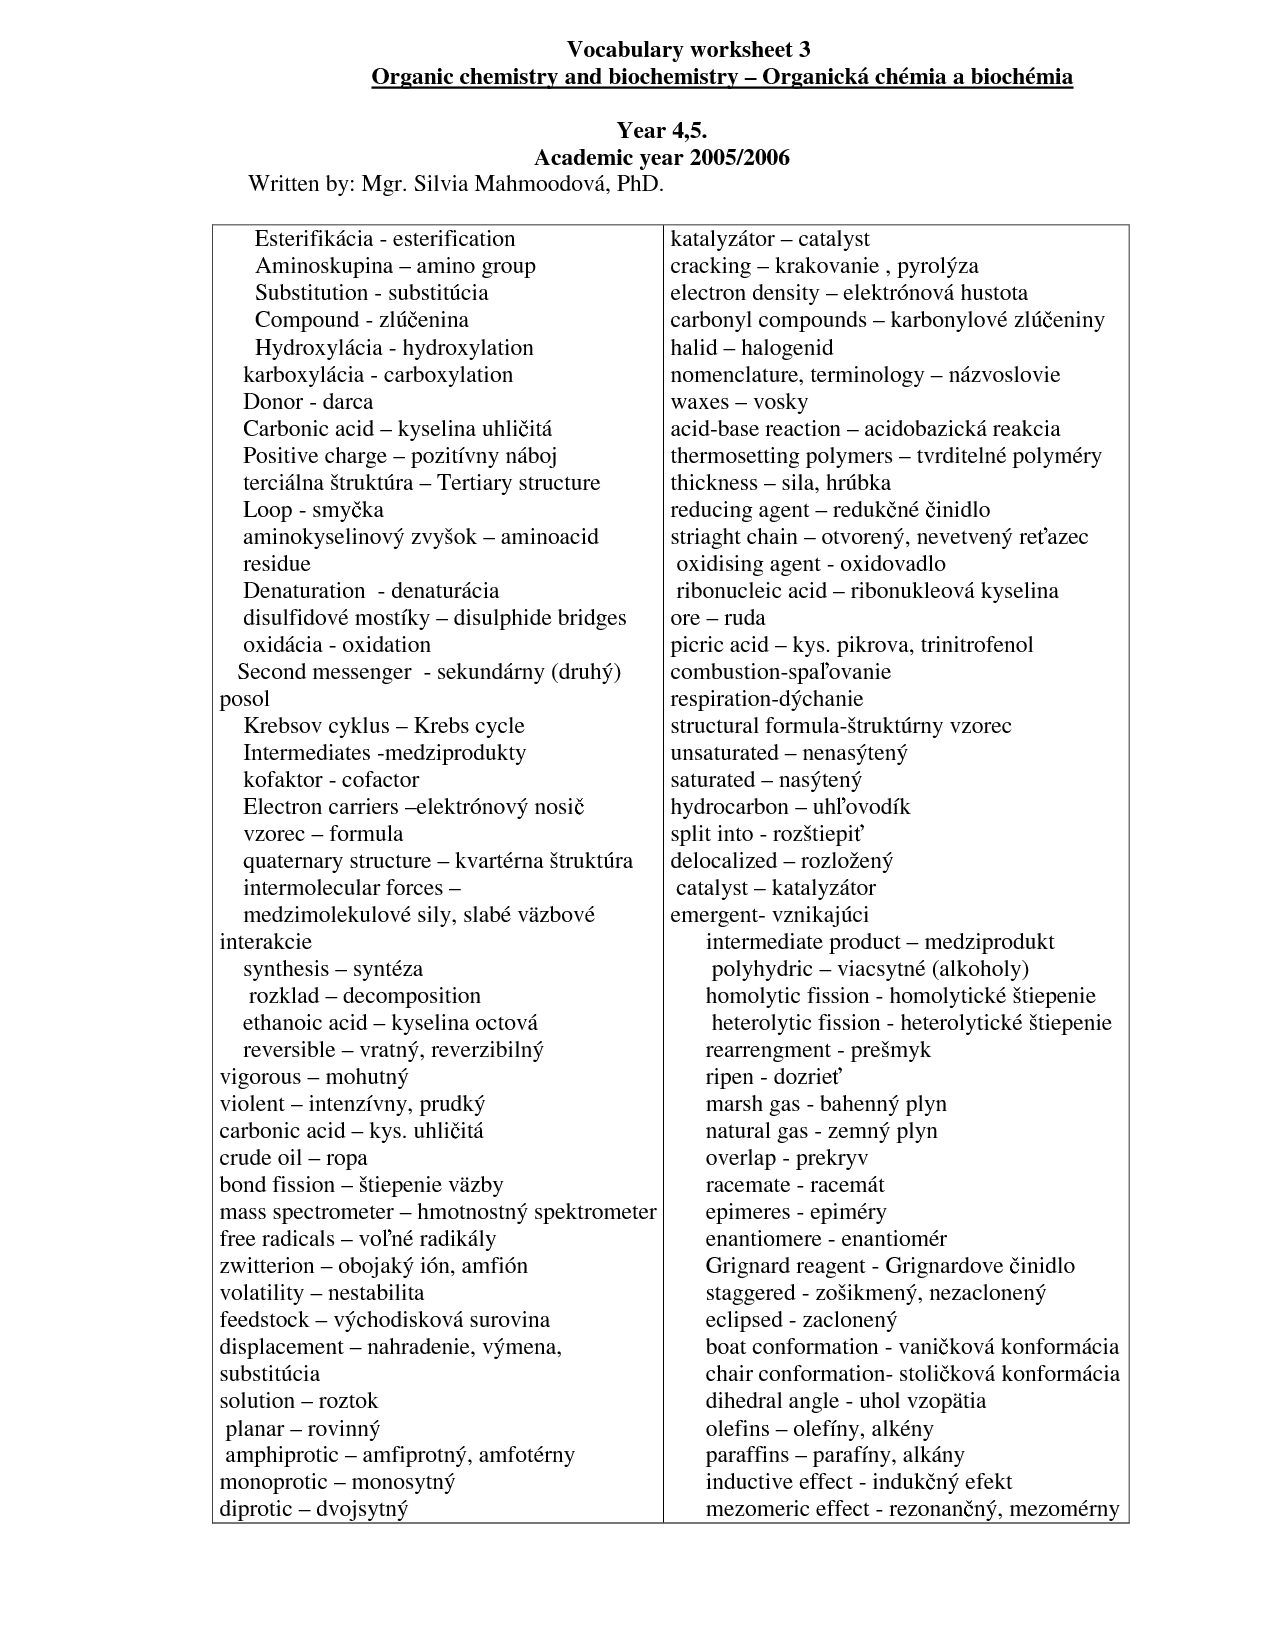 Chemistry Vocabulary Worksheet Image